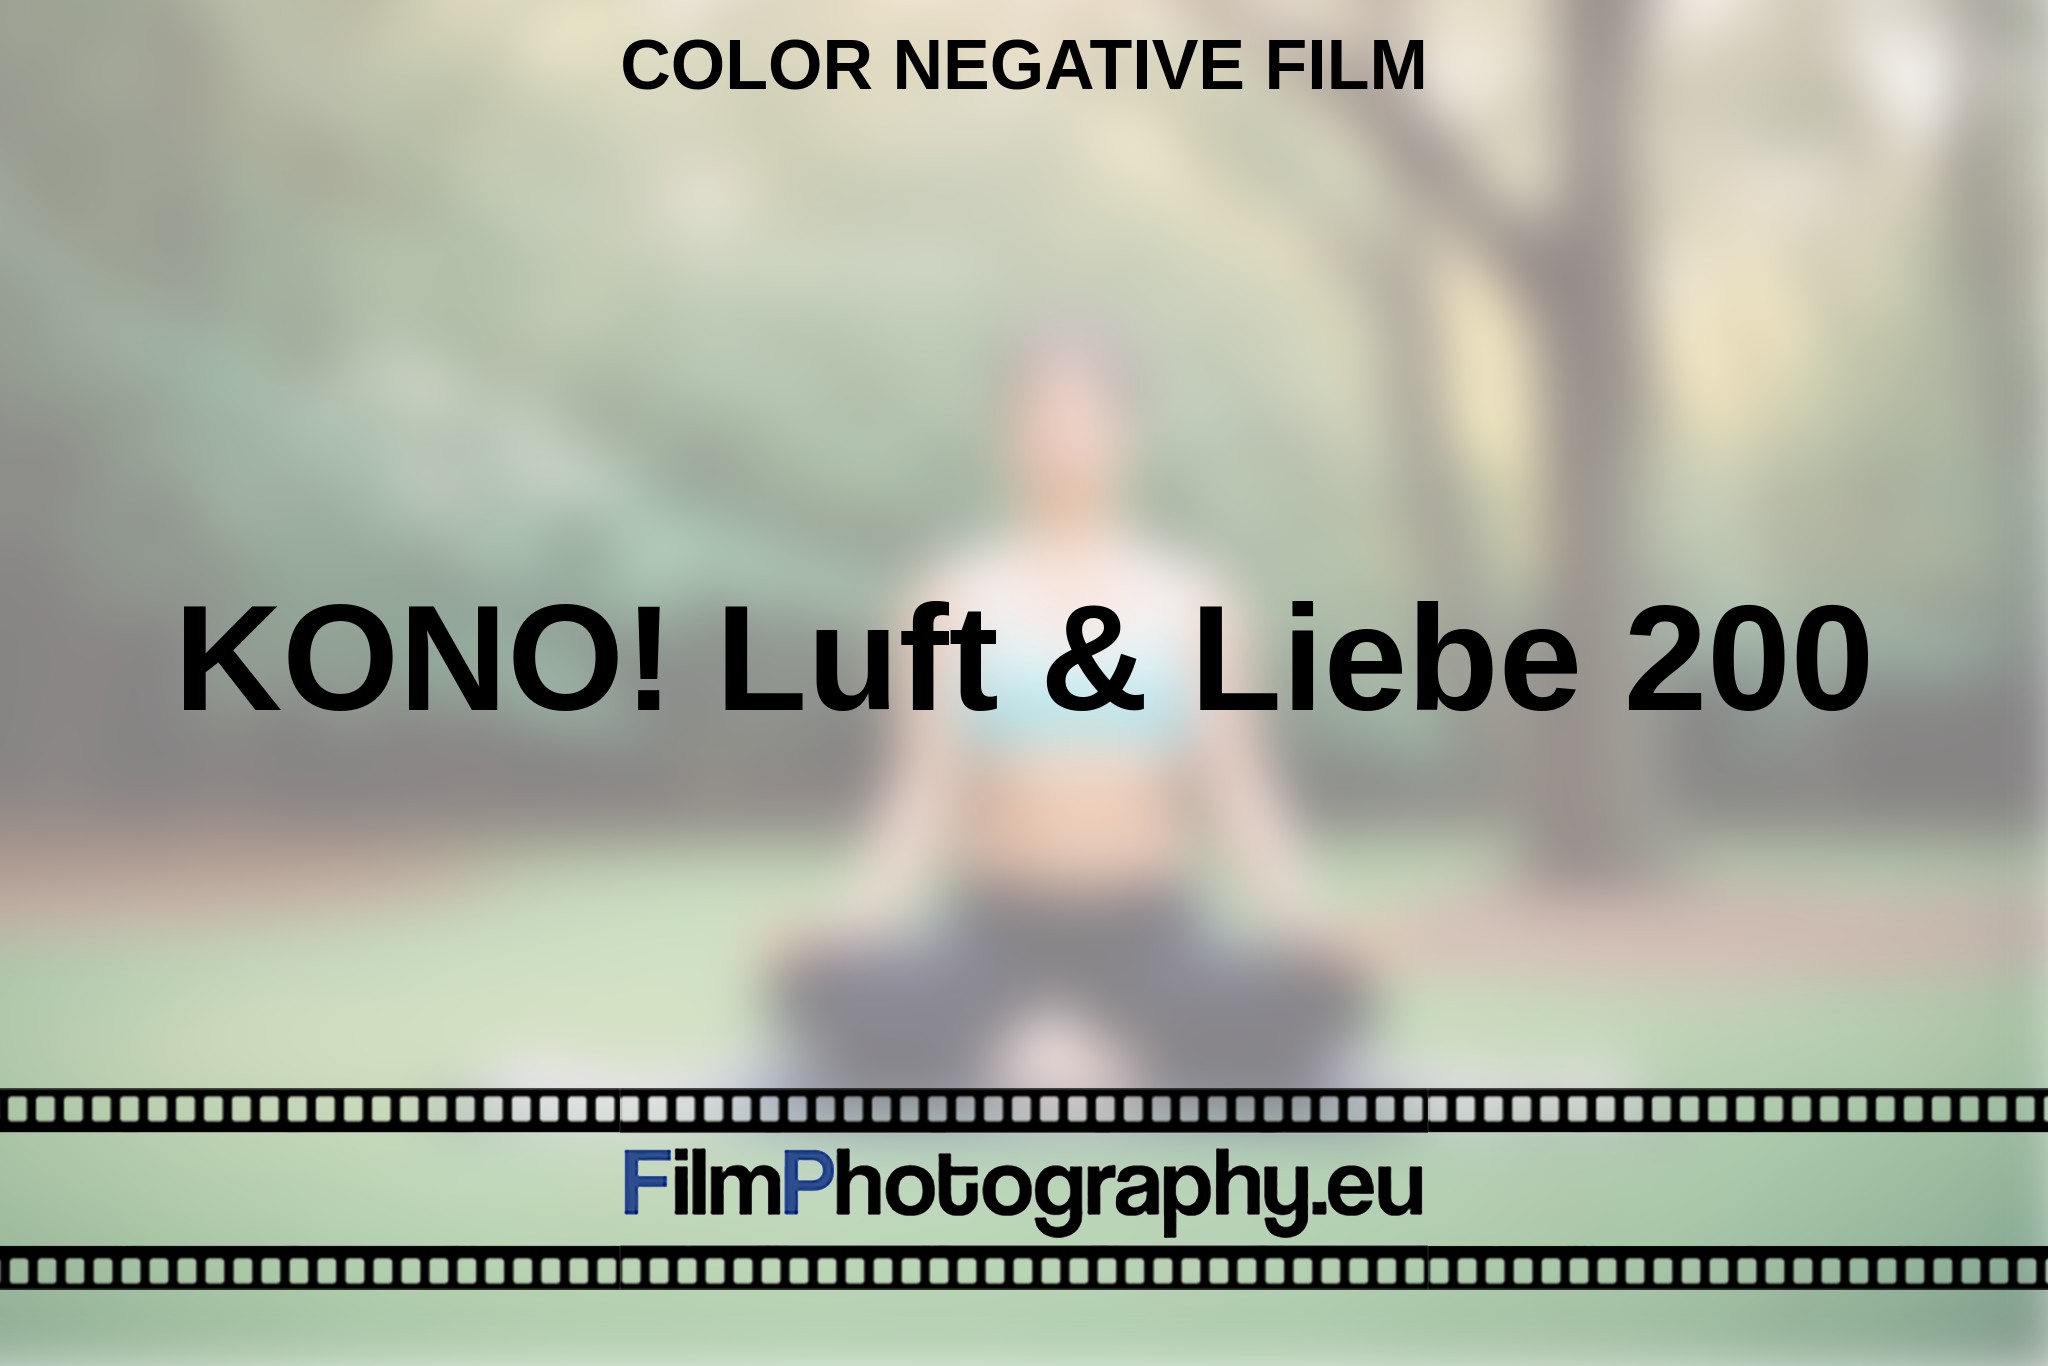 kono-luft-liebe-200-color-negative-film-bnv.jpg